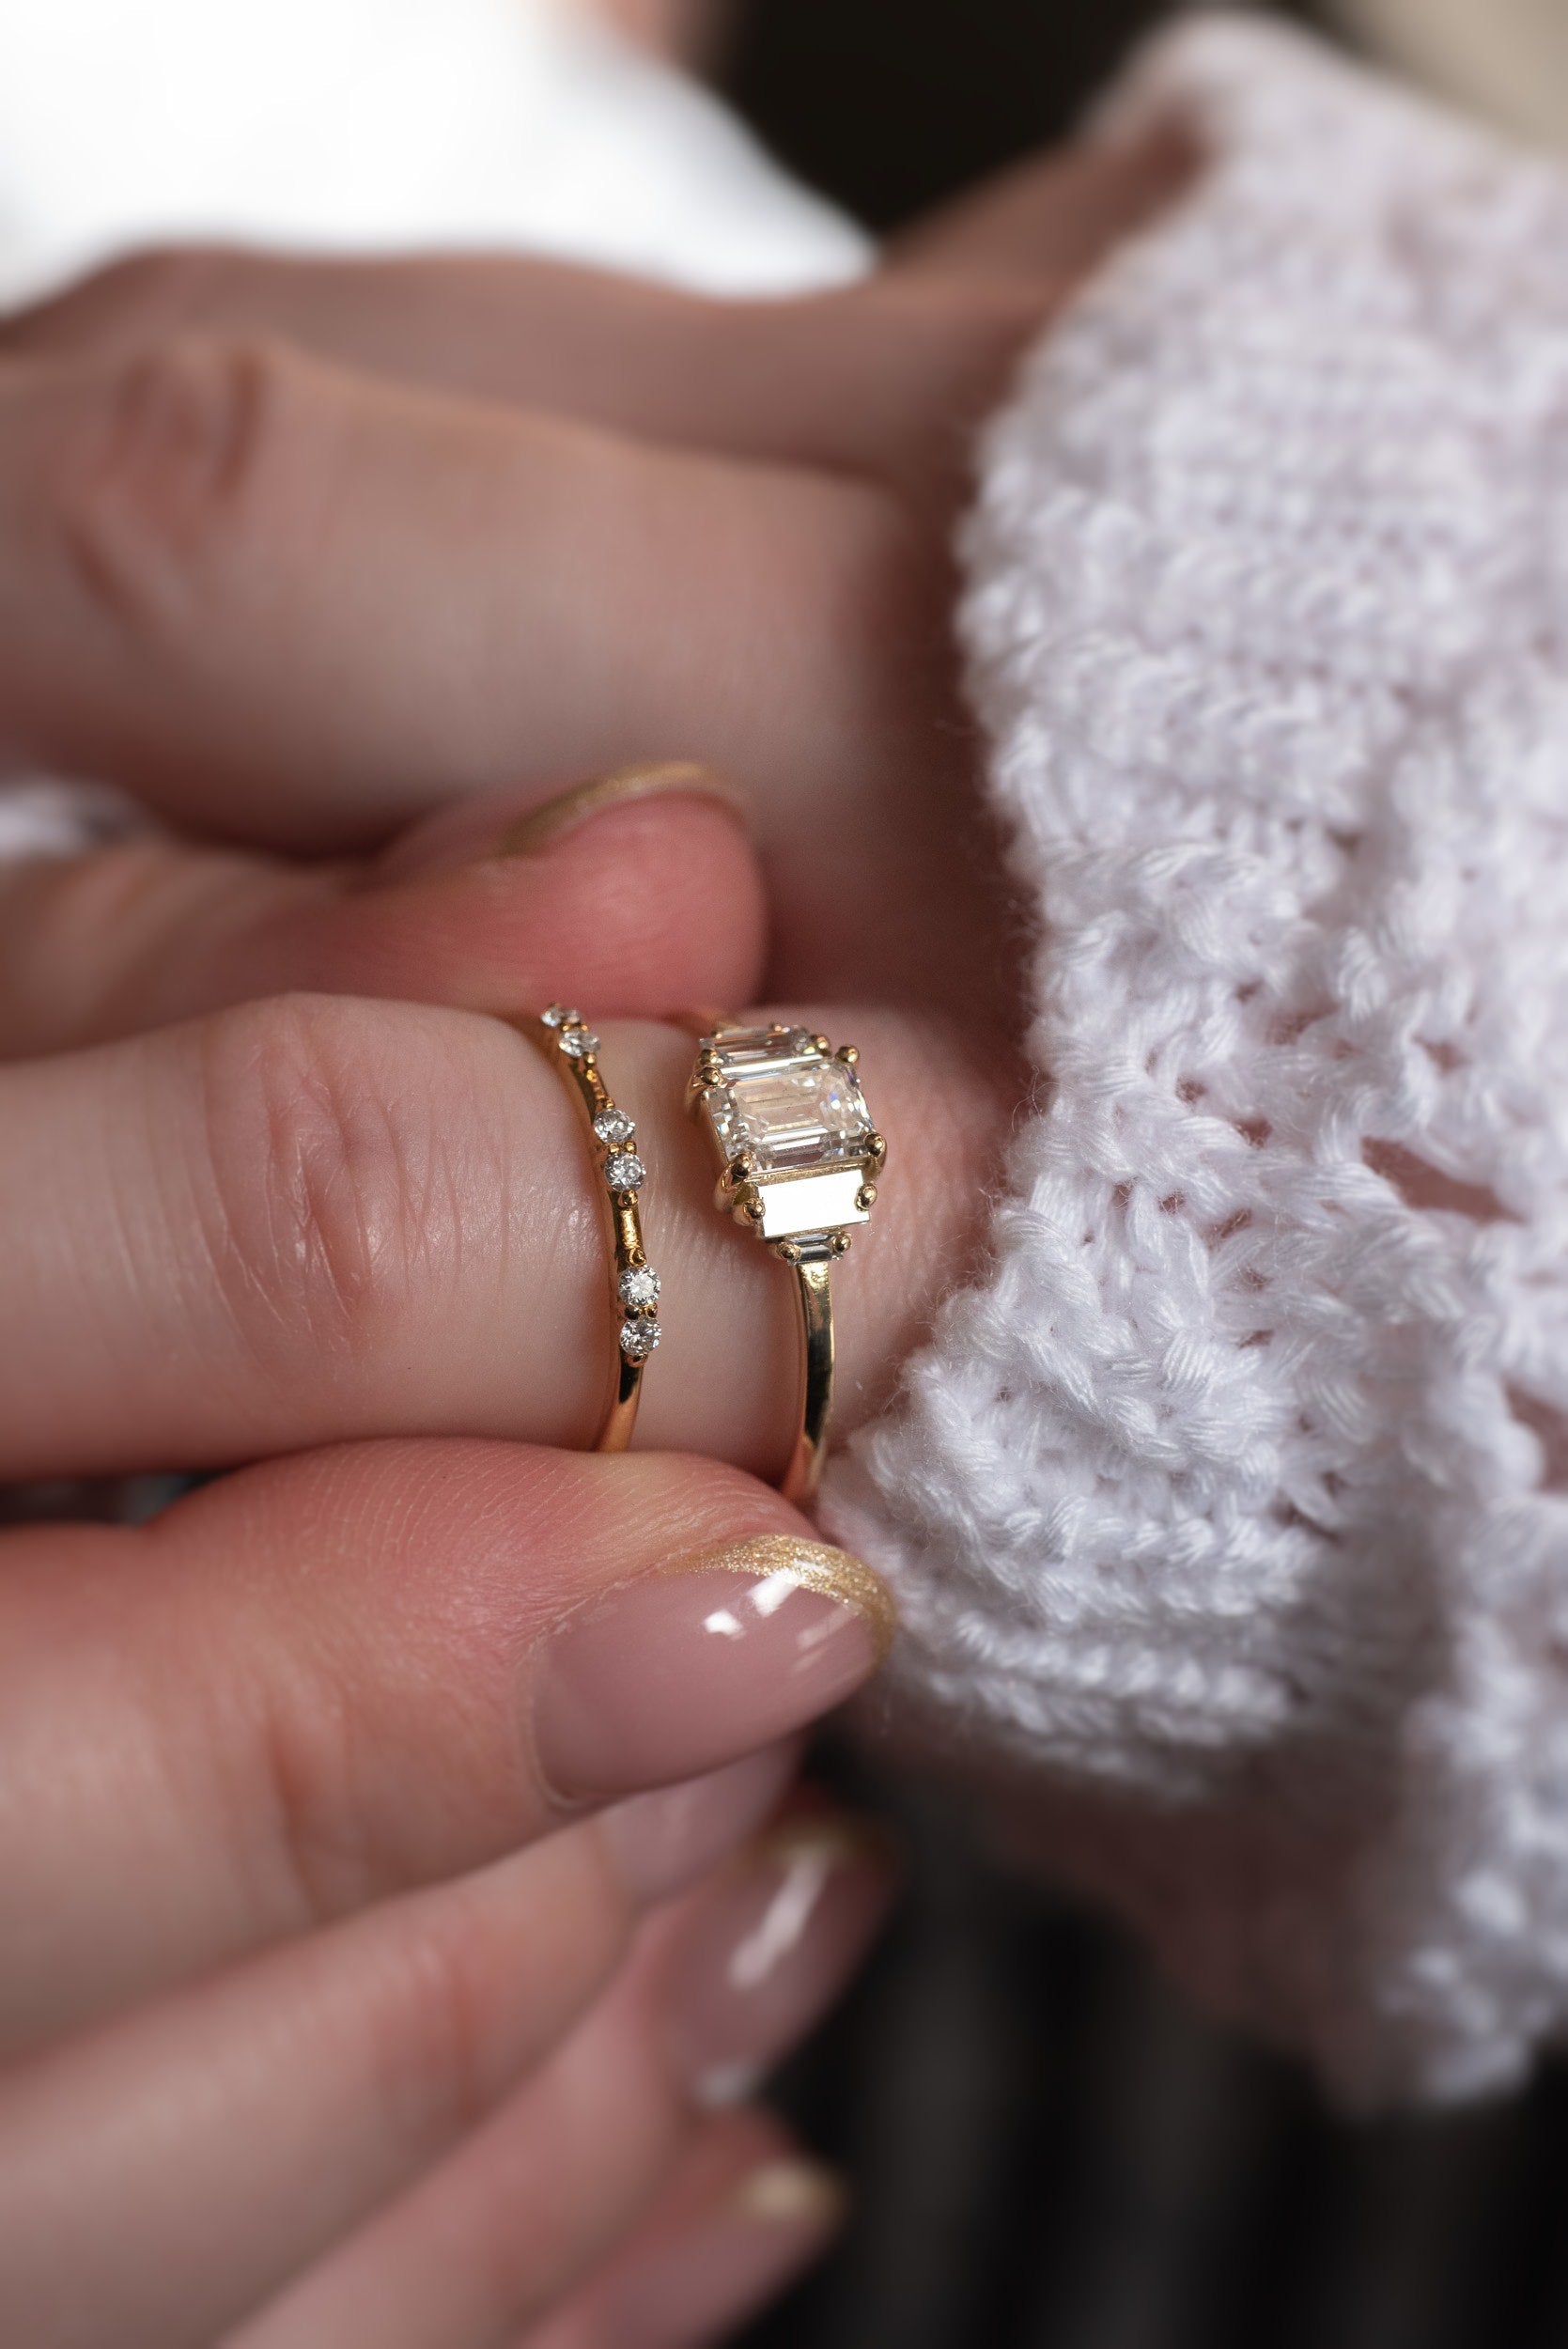 Orion's Lustre Ring - Lelya - bespoke engagement and wedding rings made in Scotland, UK